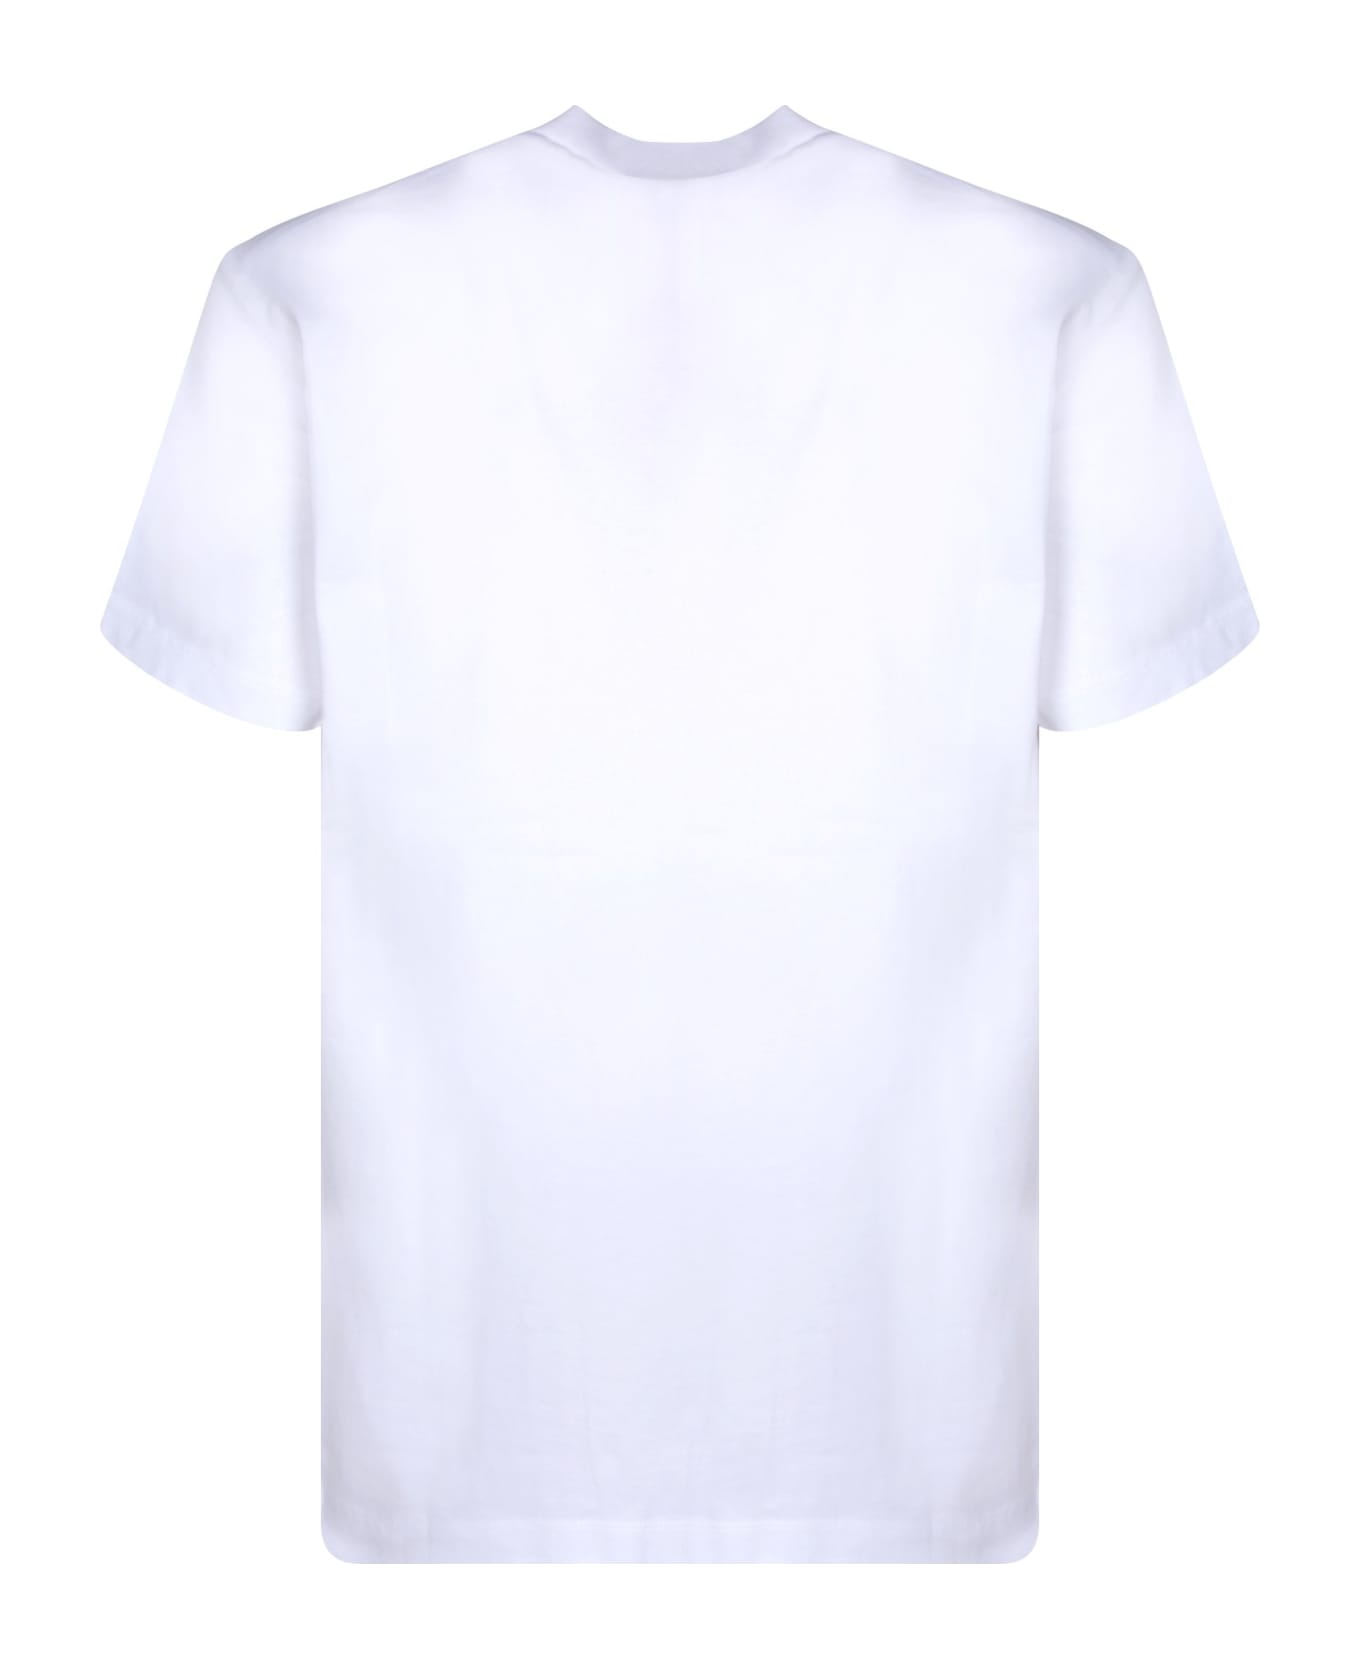 Dsquared2 Ceresio 9 T-shirt - WHITE